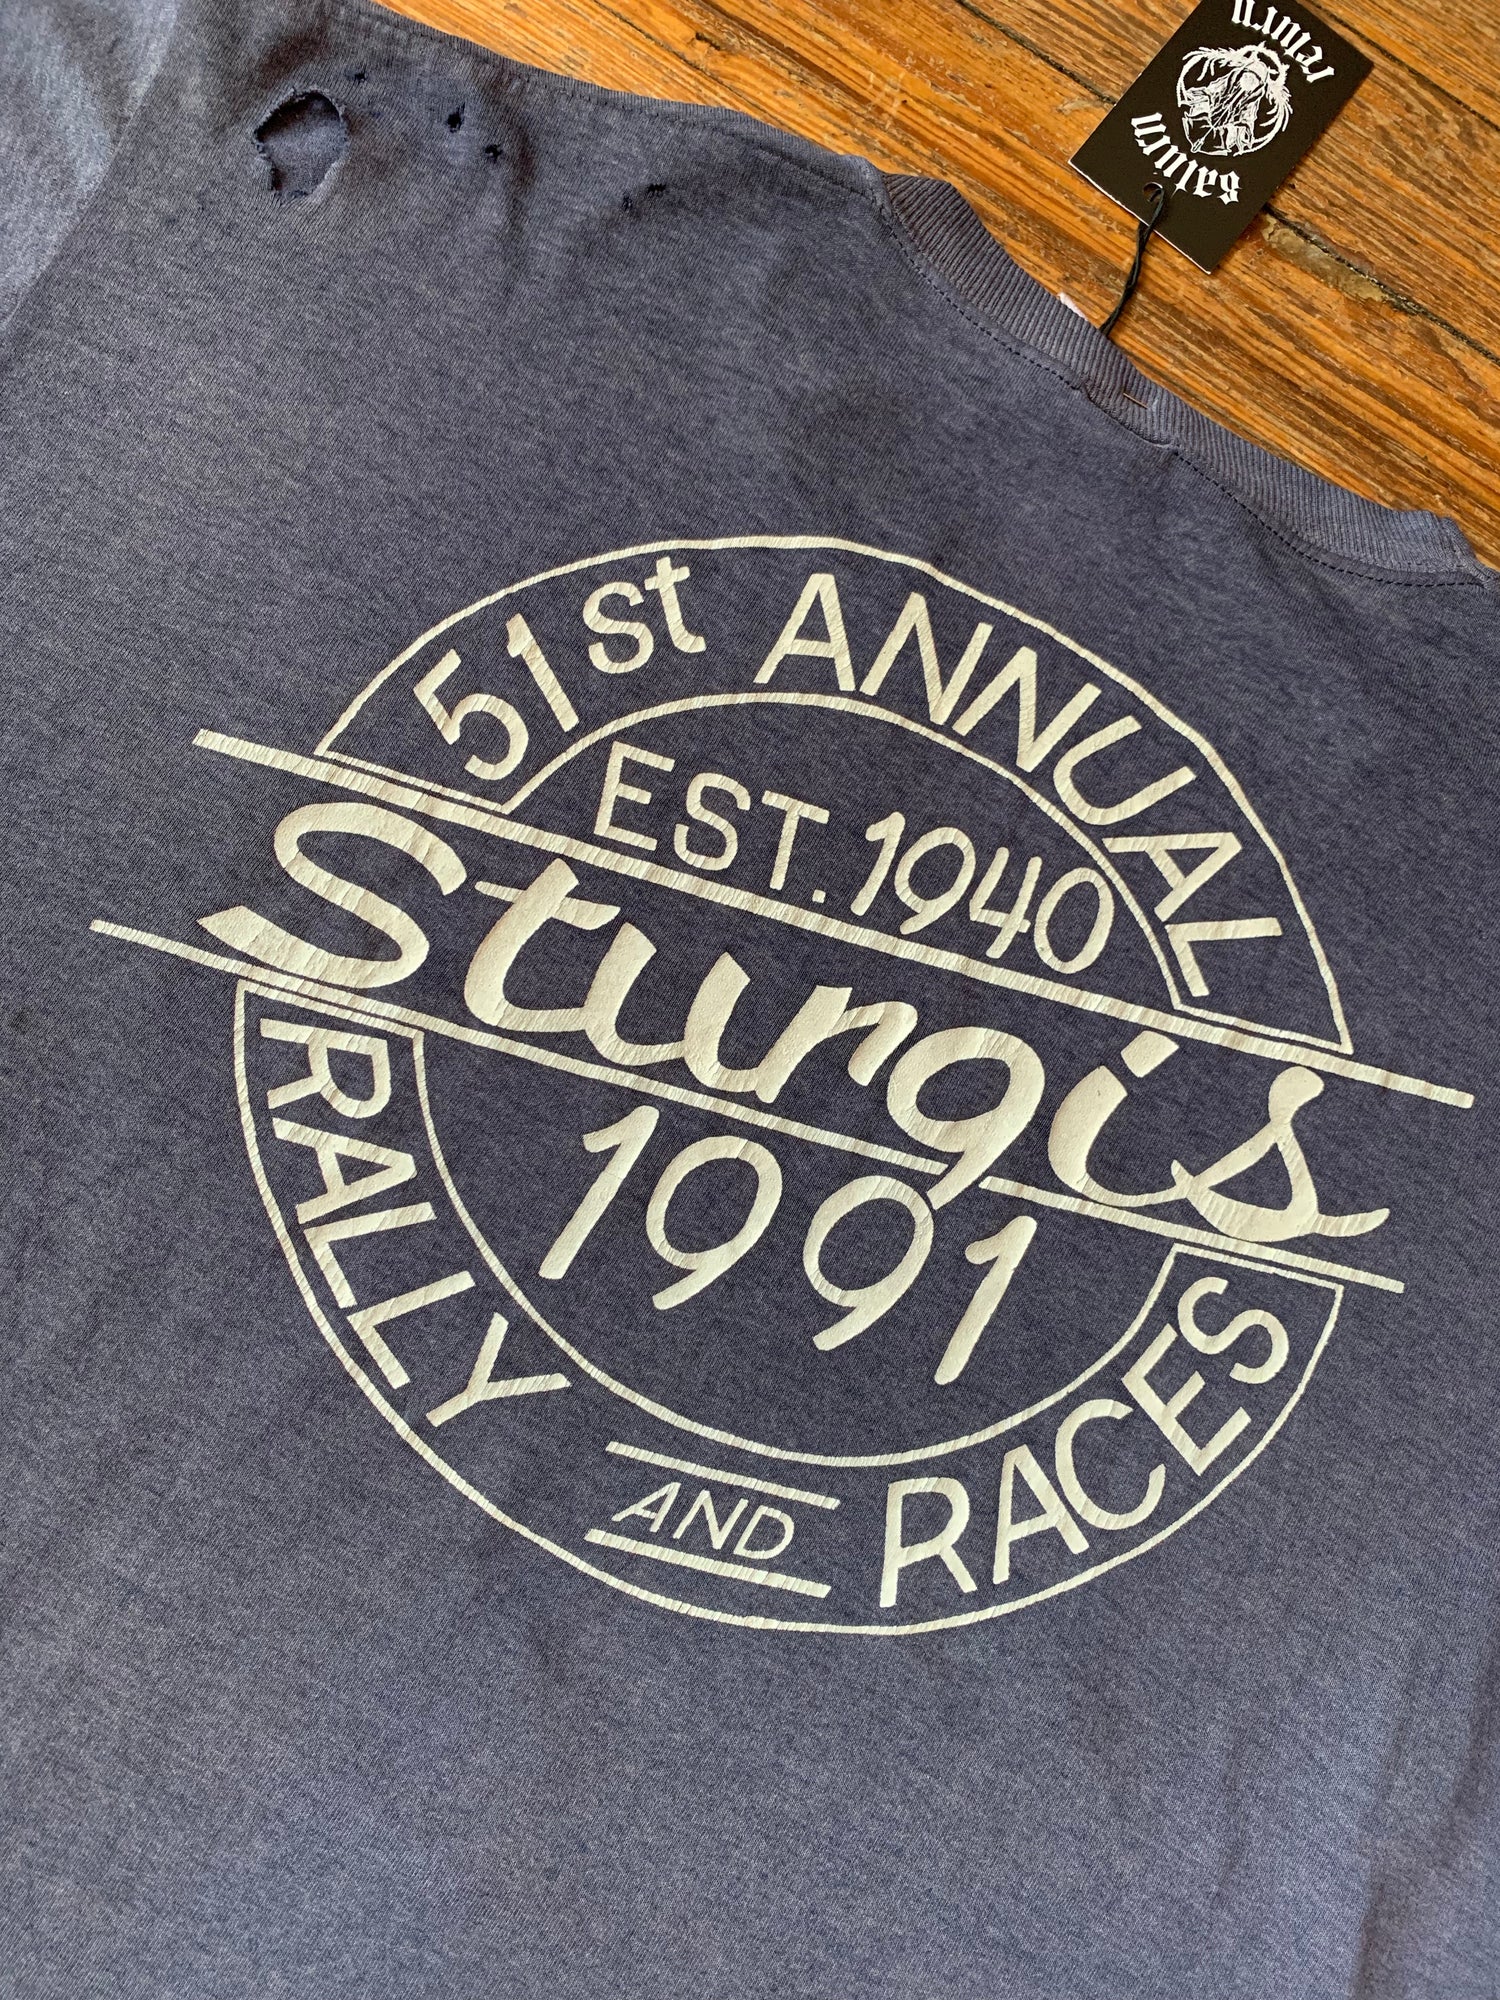 1991 Harley Davidson Sturgis 51th Vintage T-Shirt Single Stitched